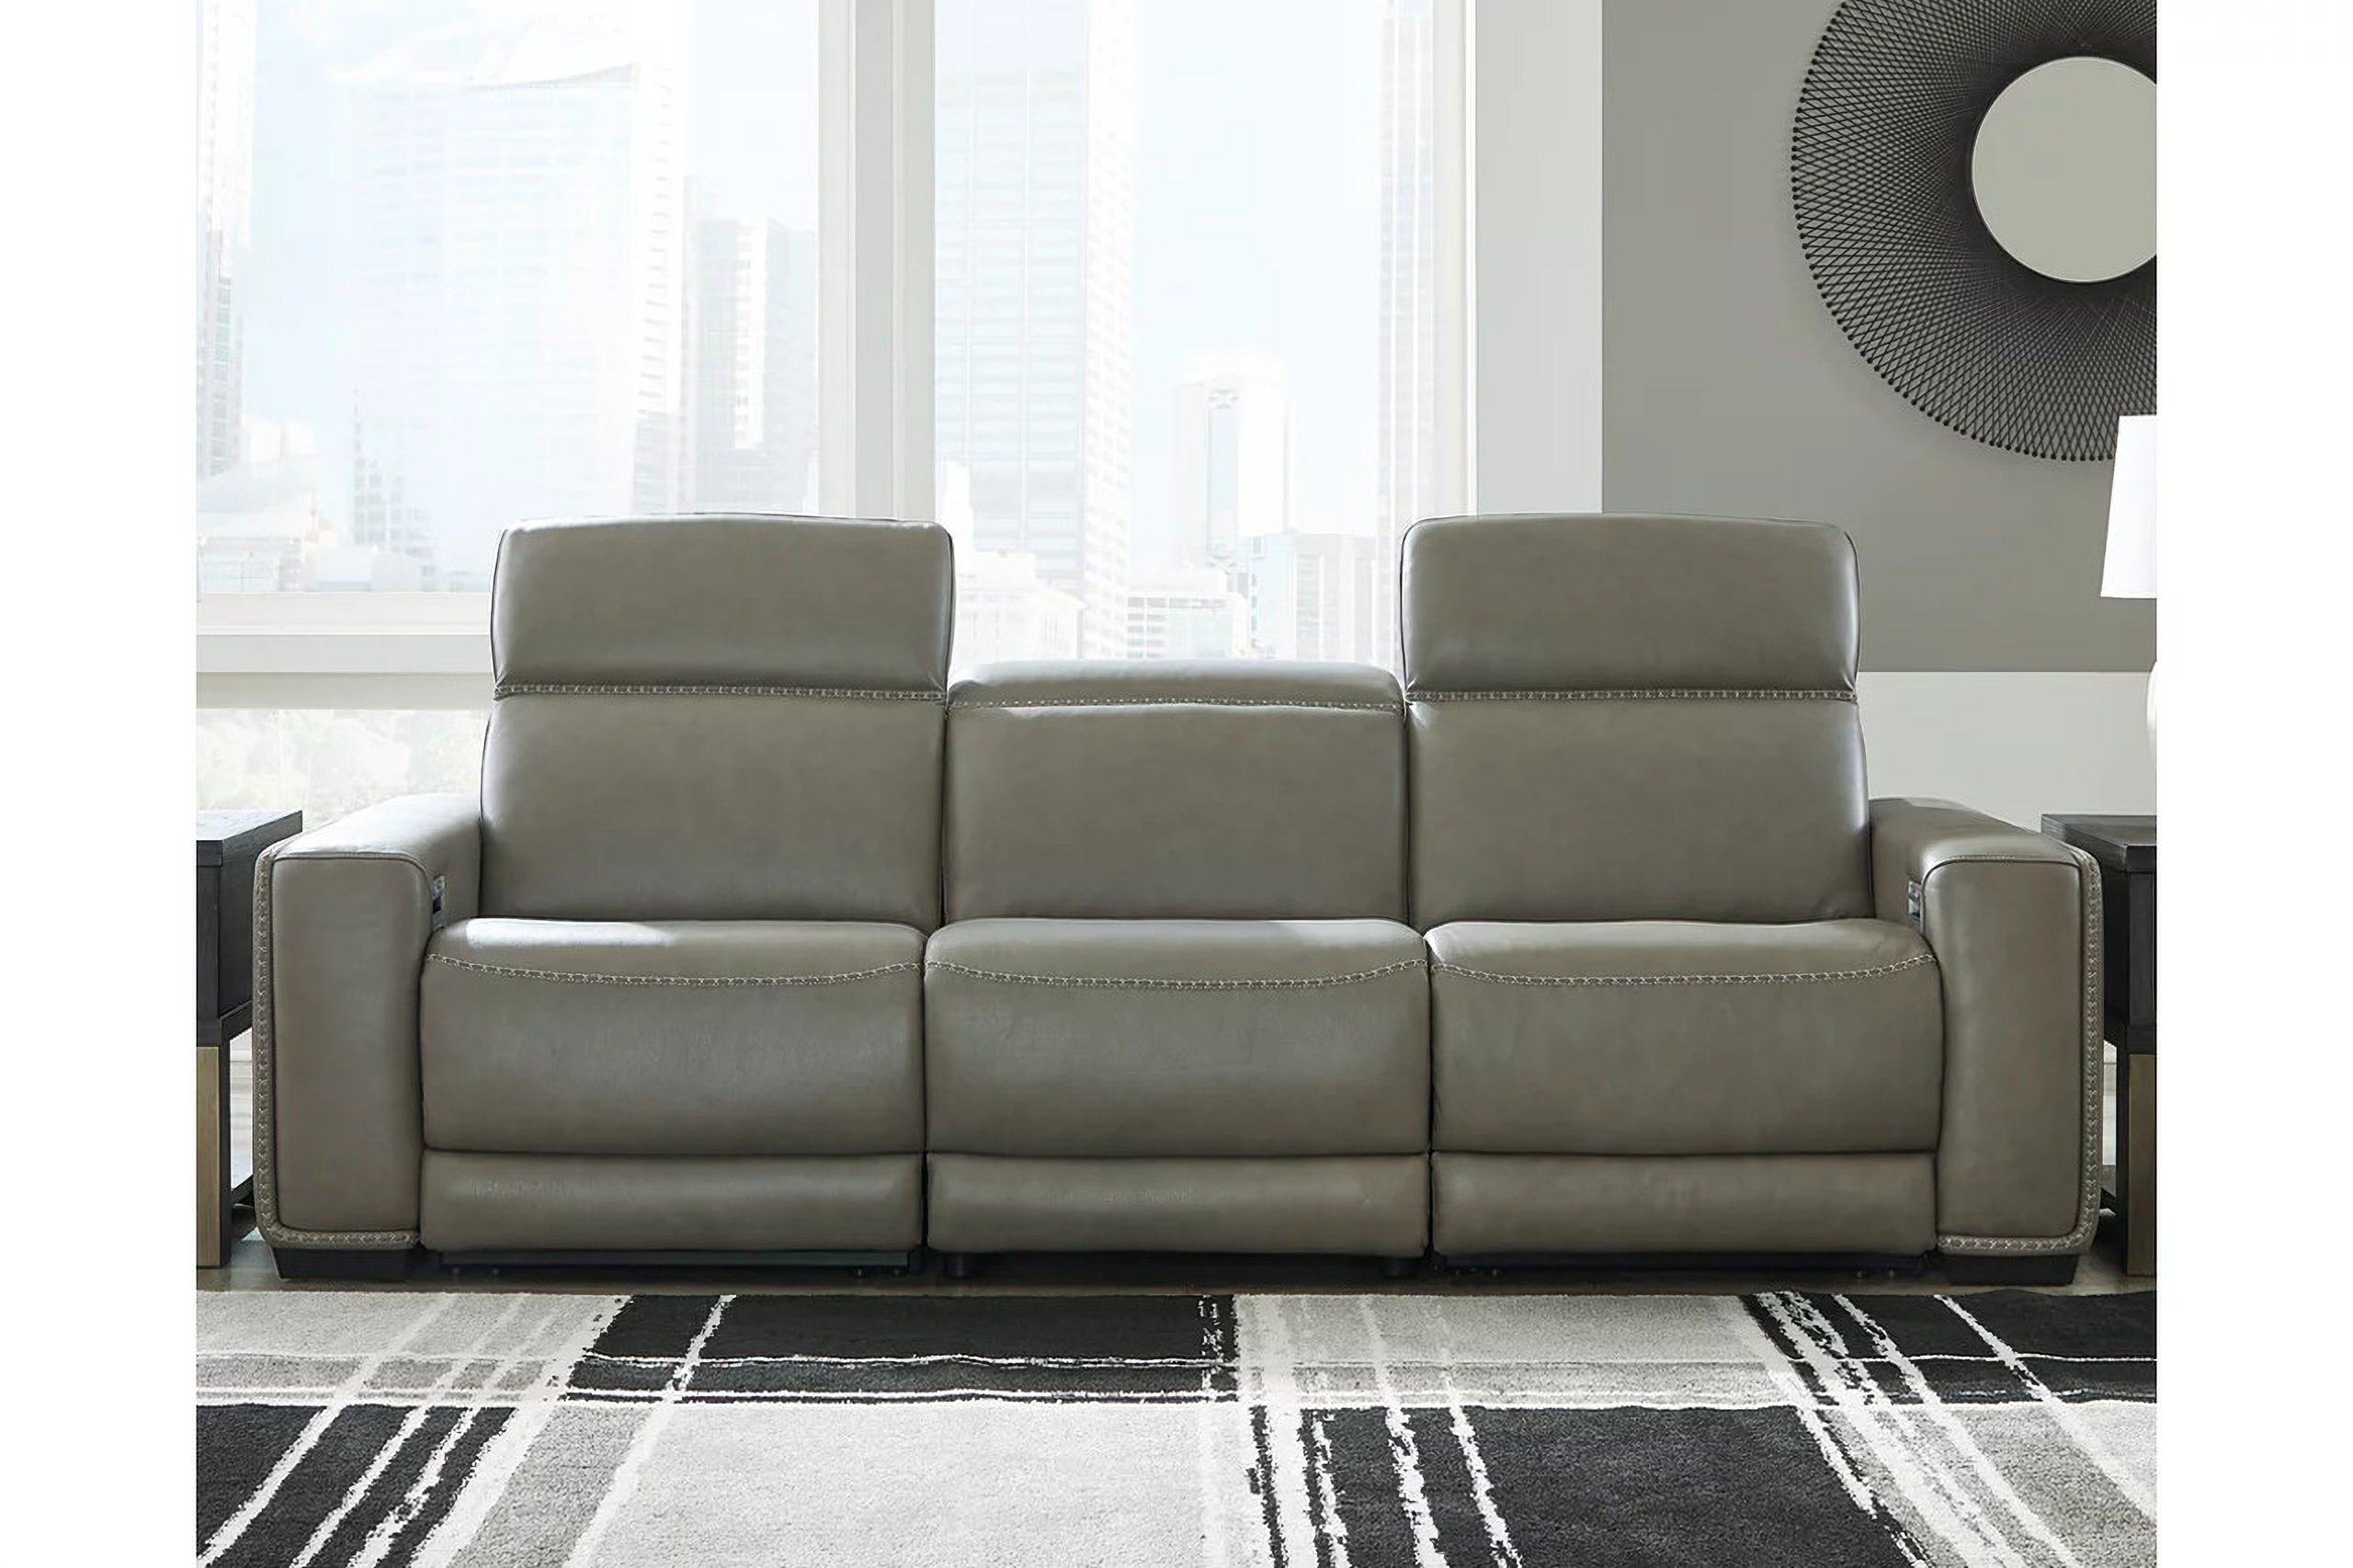 https://cdn.1stopbedrooms.com/media/catalog/product/c/o/correze-power-reclining-leather-sofa-in-gray_qb13268085_21.jpg